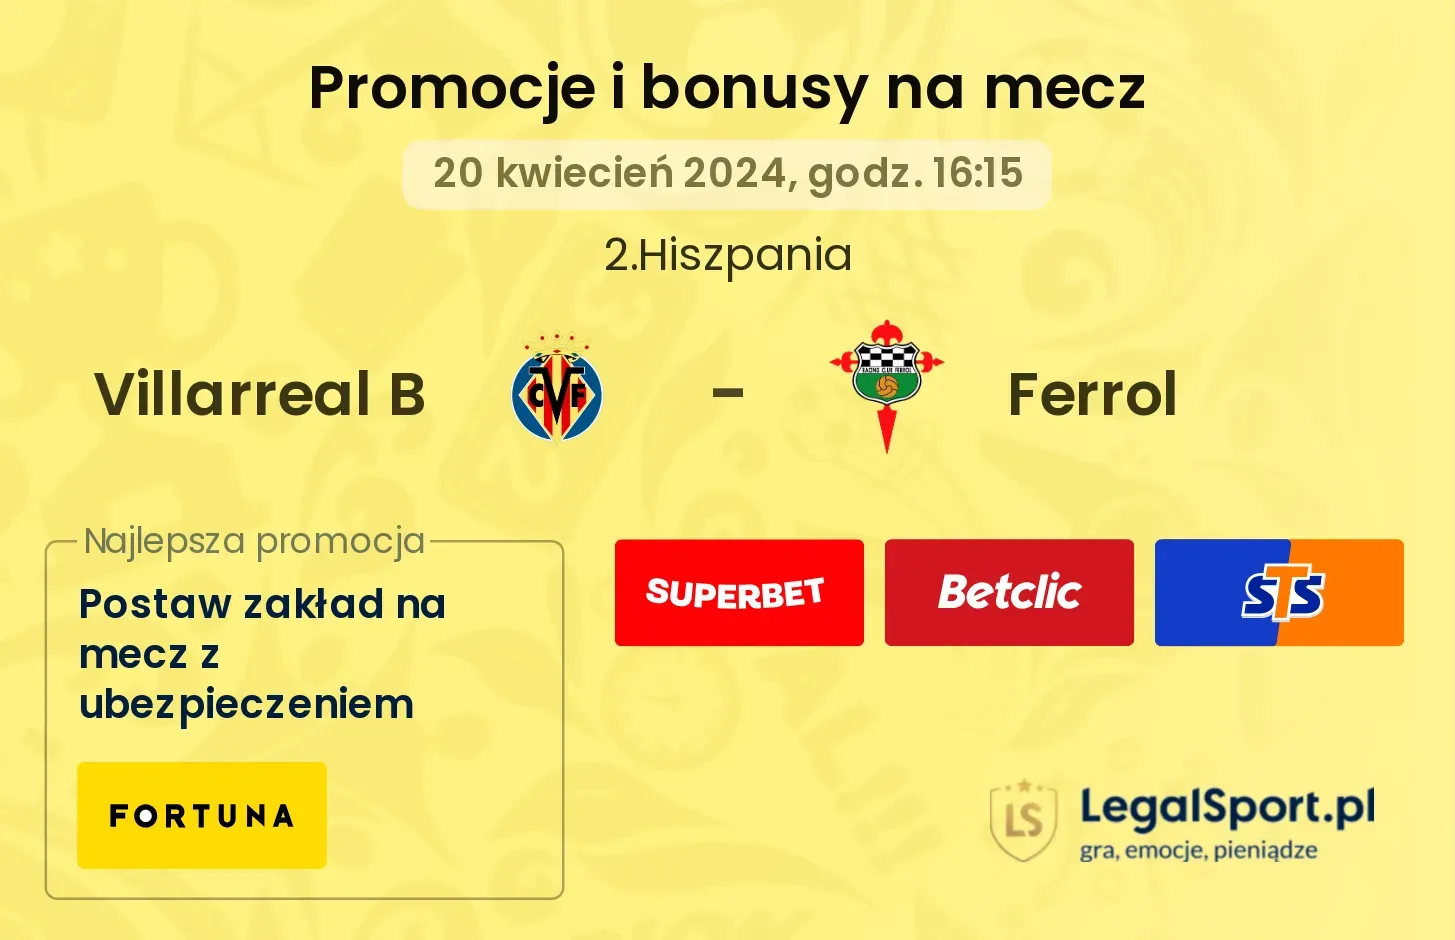 Villarreal B - Ferrol promocje bonusy na mecz